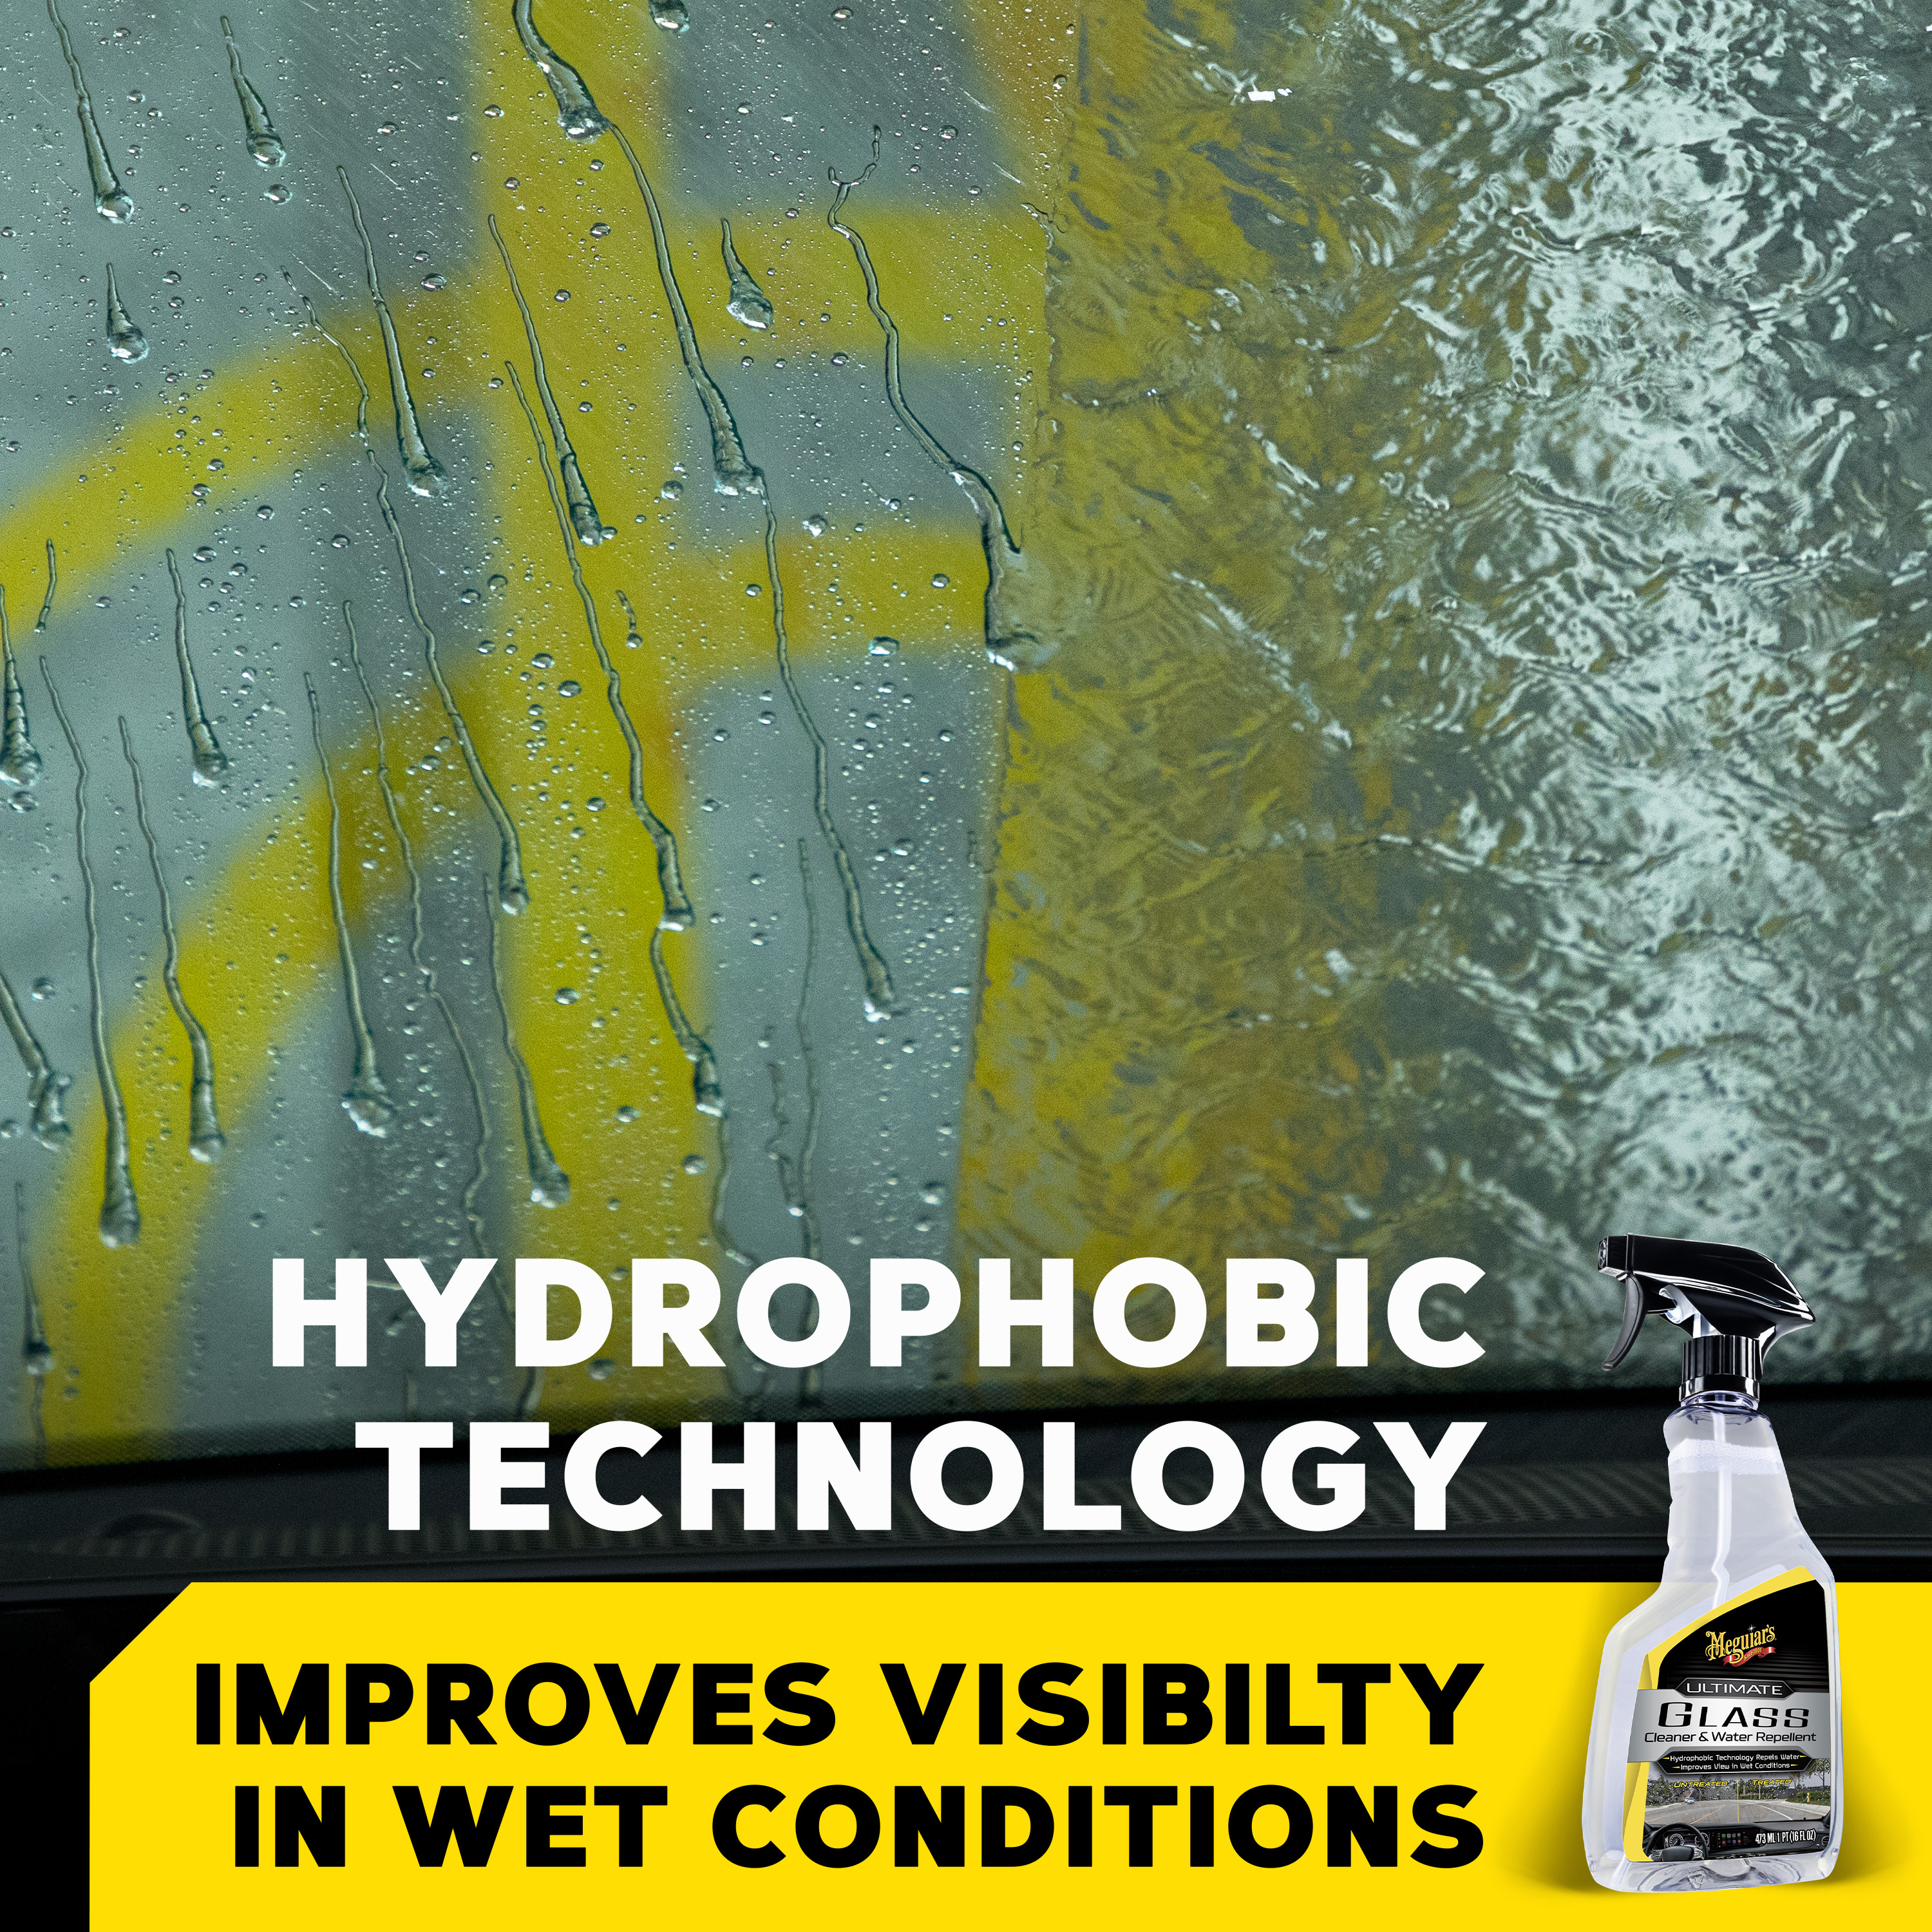 Rain-X Glass Cleaner + Rain Repellent High quality Effective